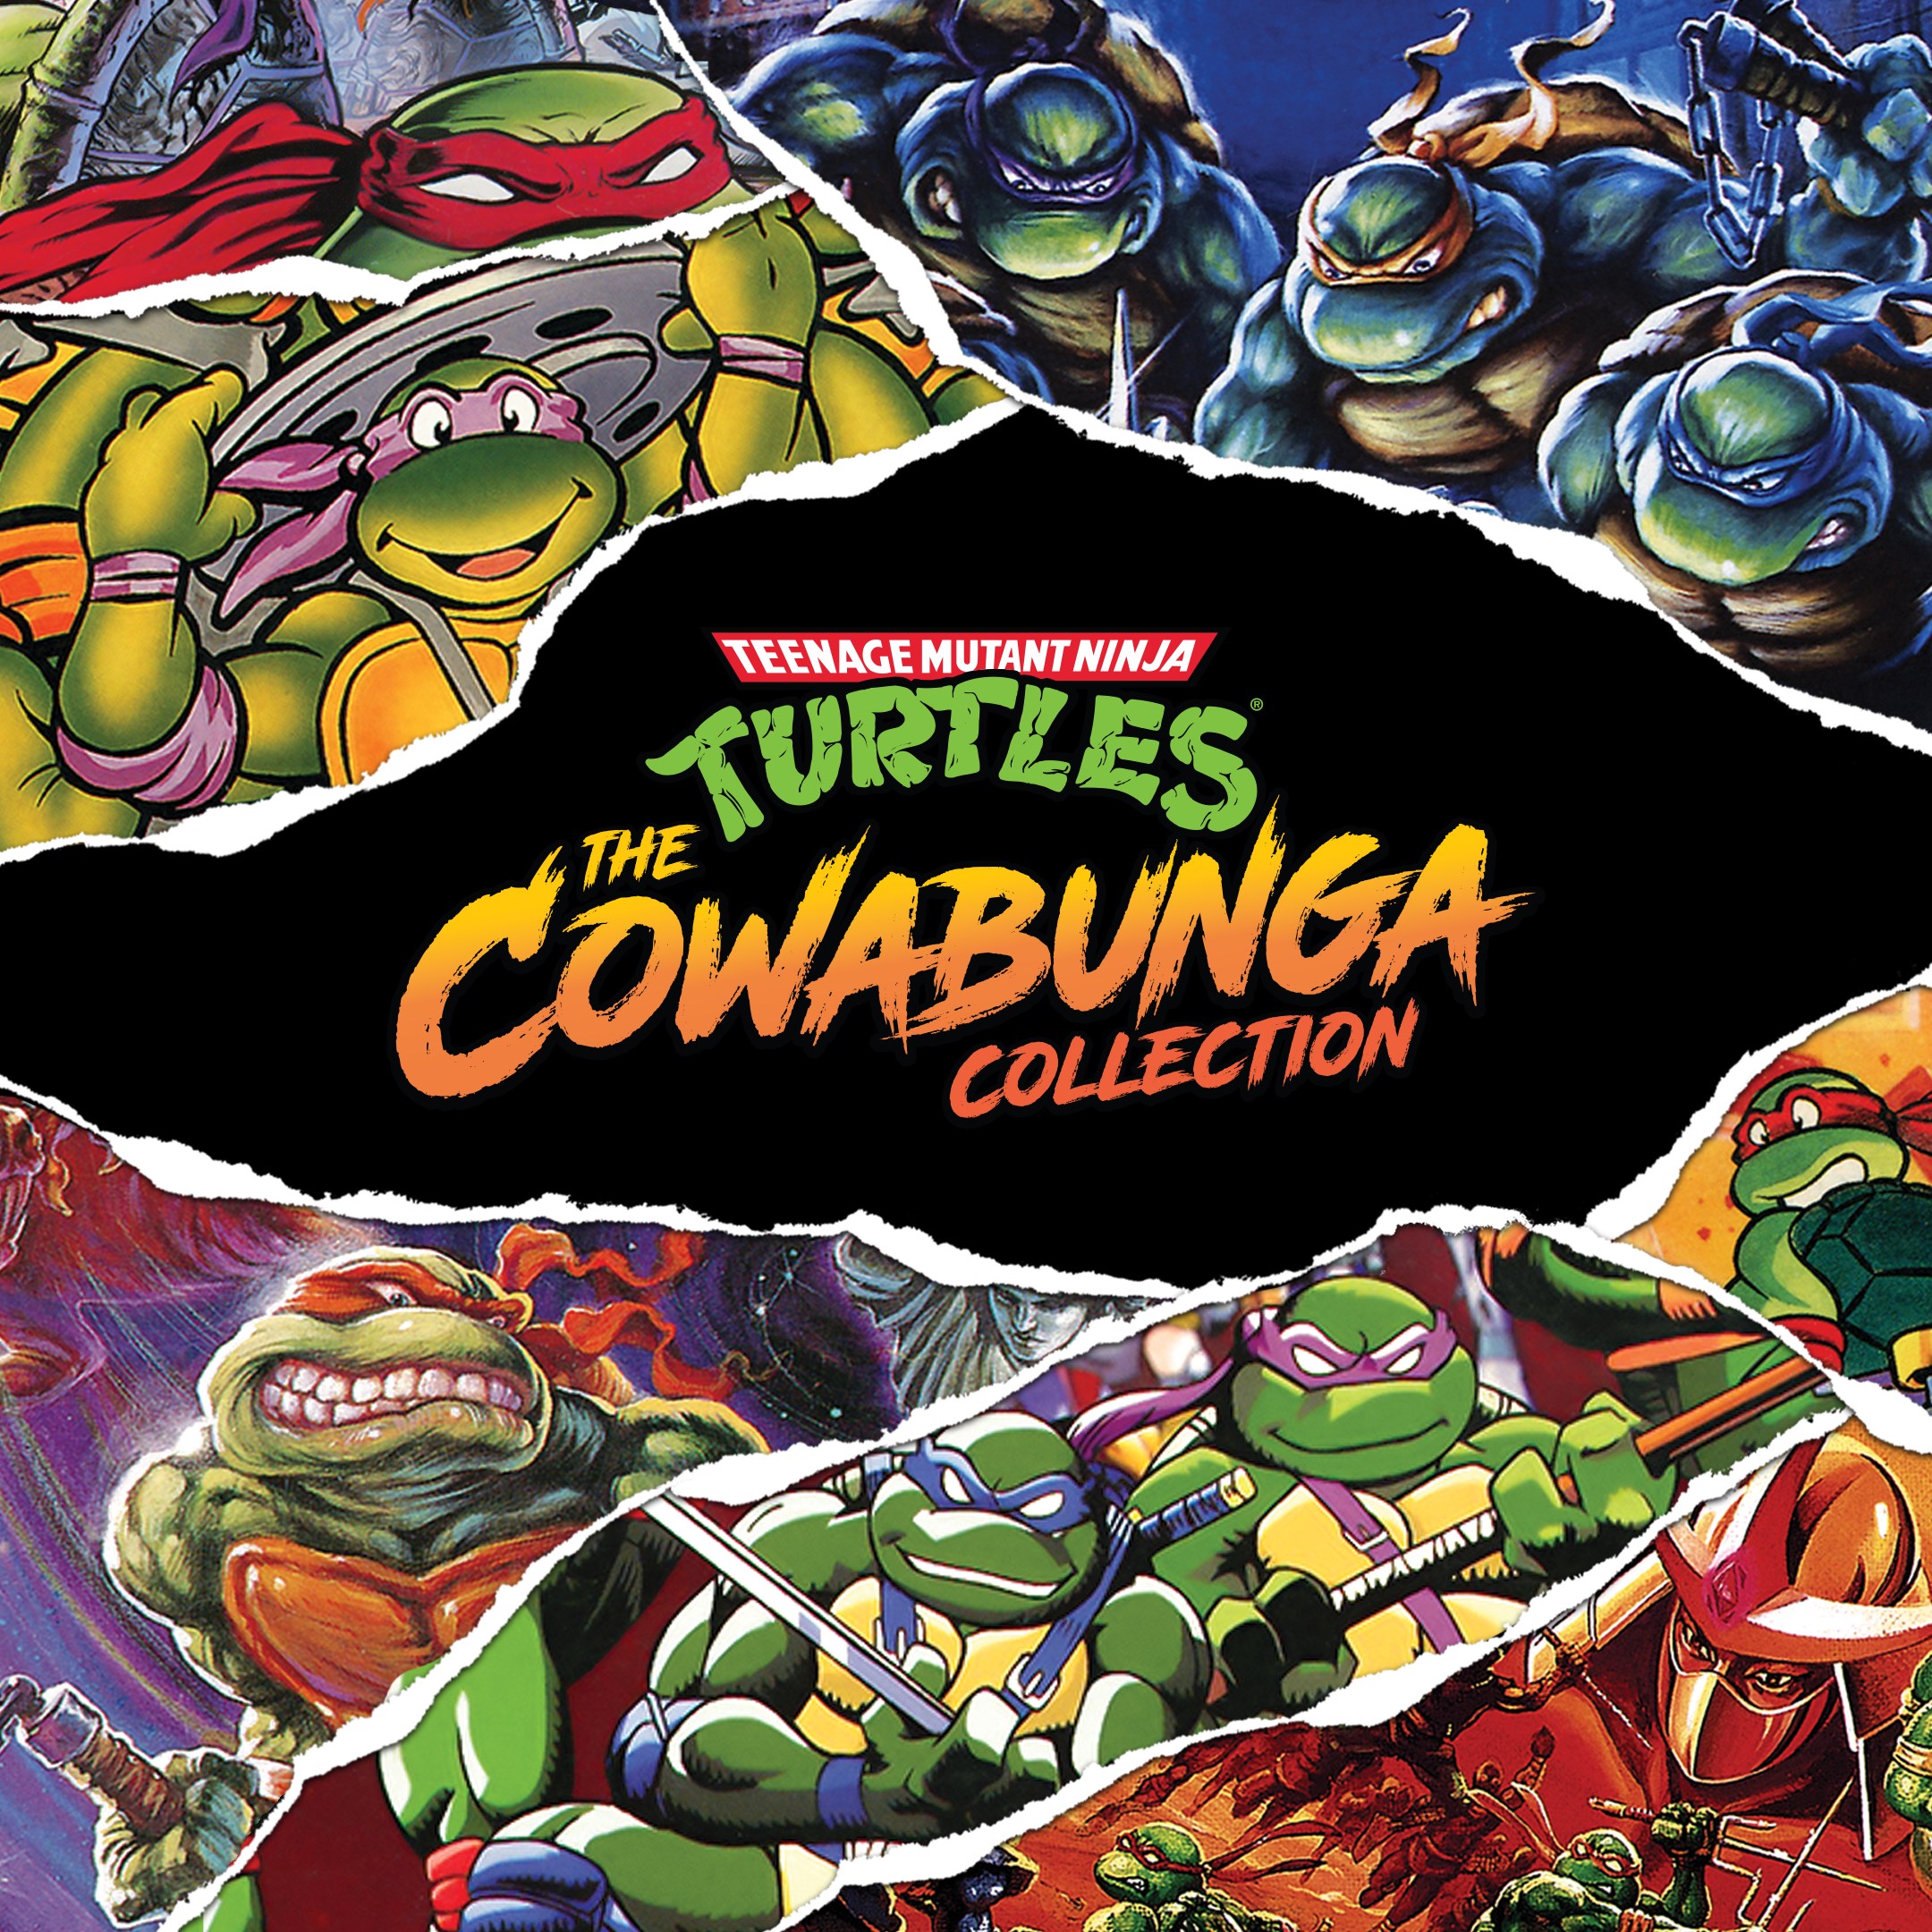 Turtles collections. TMNT Cowabunga collection PLAYSTATION 4. Teenage Mutant Ninja Turtles: the Cowabunga collection [ps4, английская версия]. Пятая черепашка ниндзя. Черепашки ниндзя на пс4.